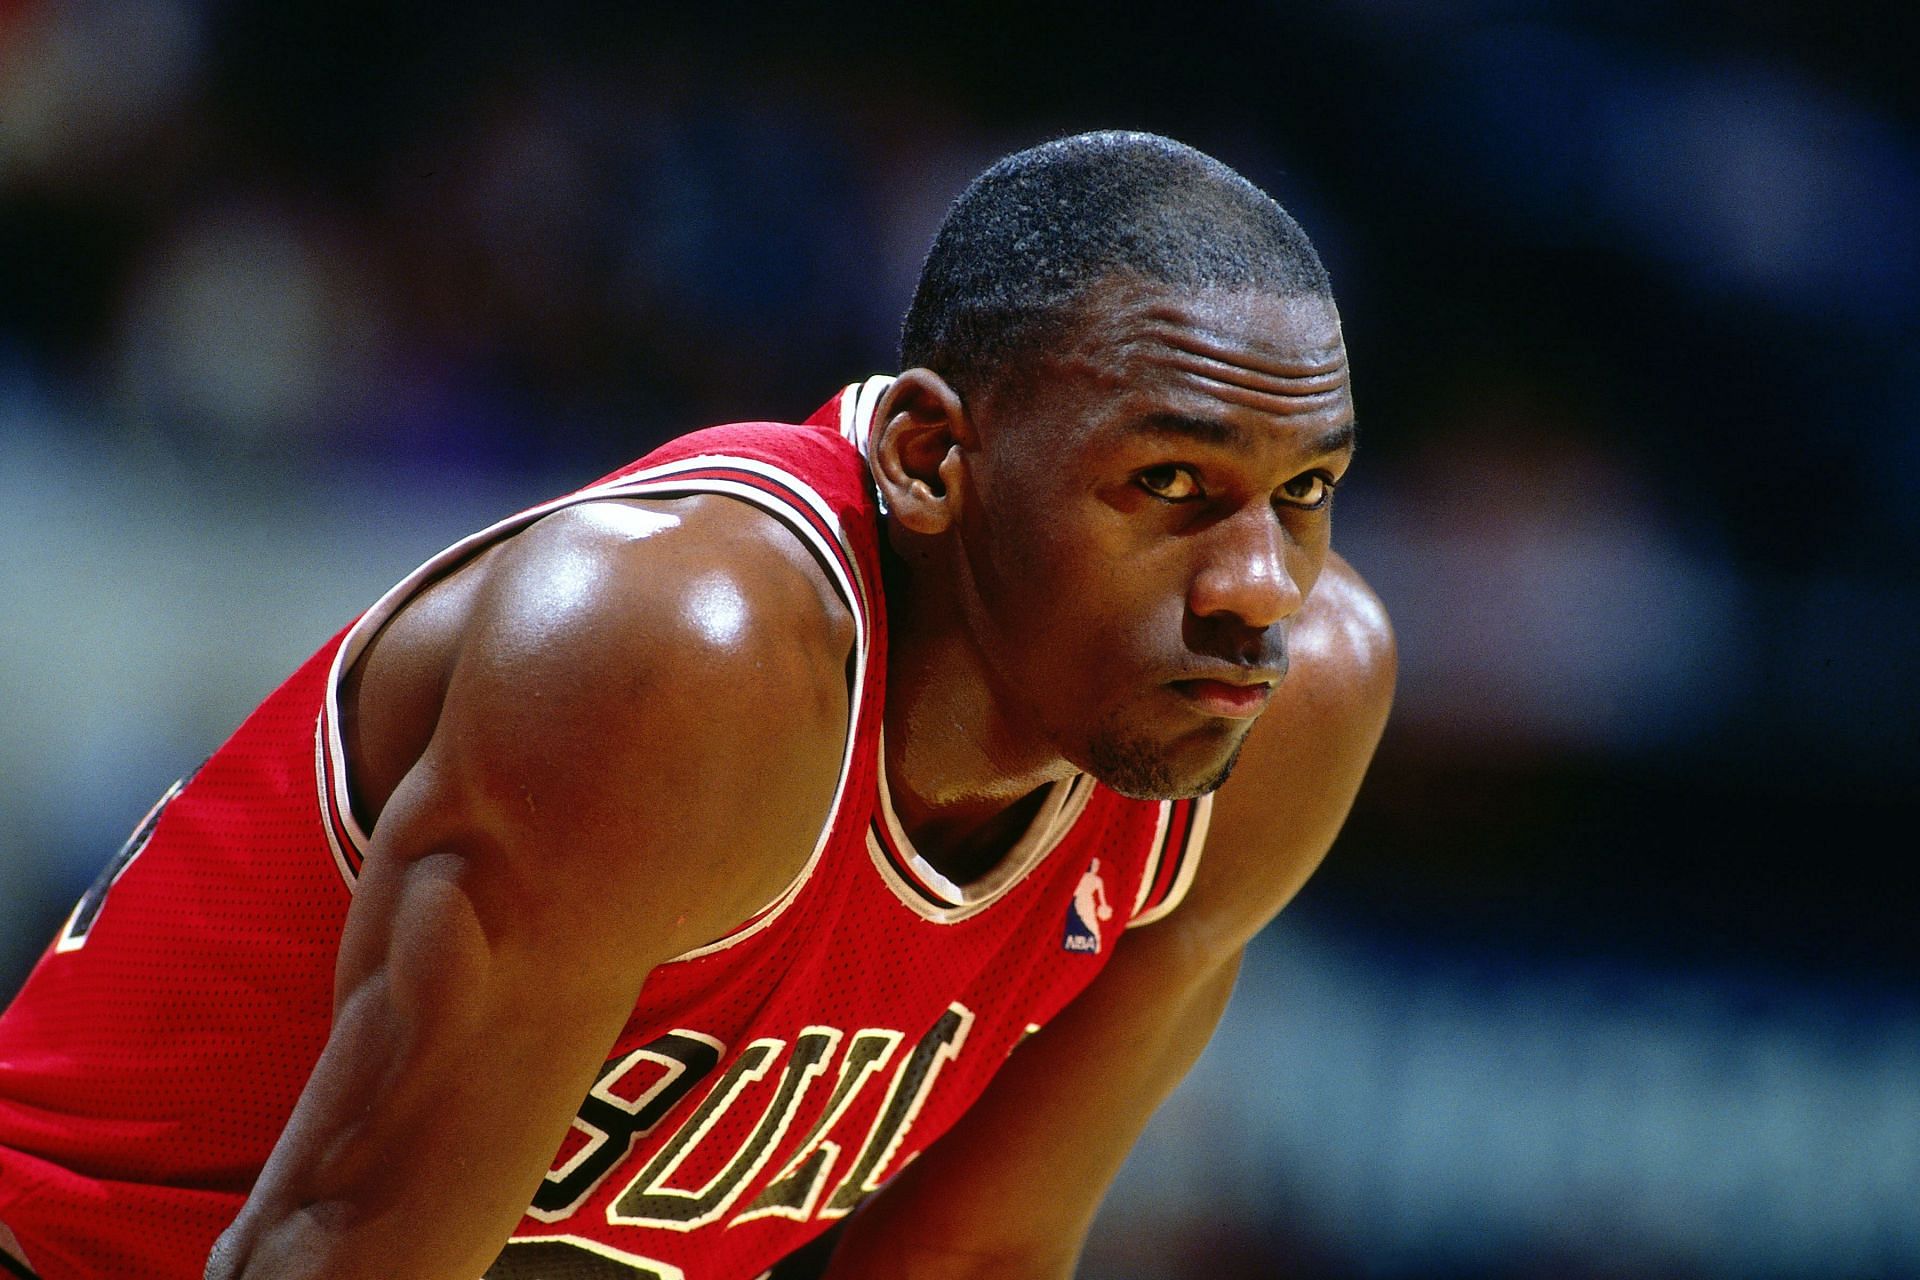 Michael Jordan won six NBA championships with the Chicago Bulls